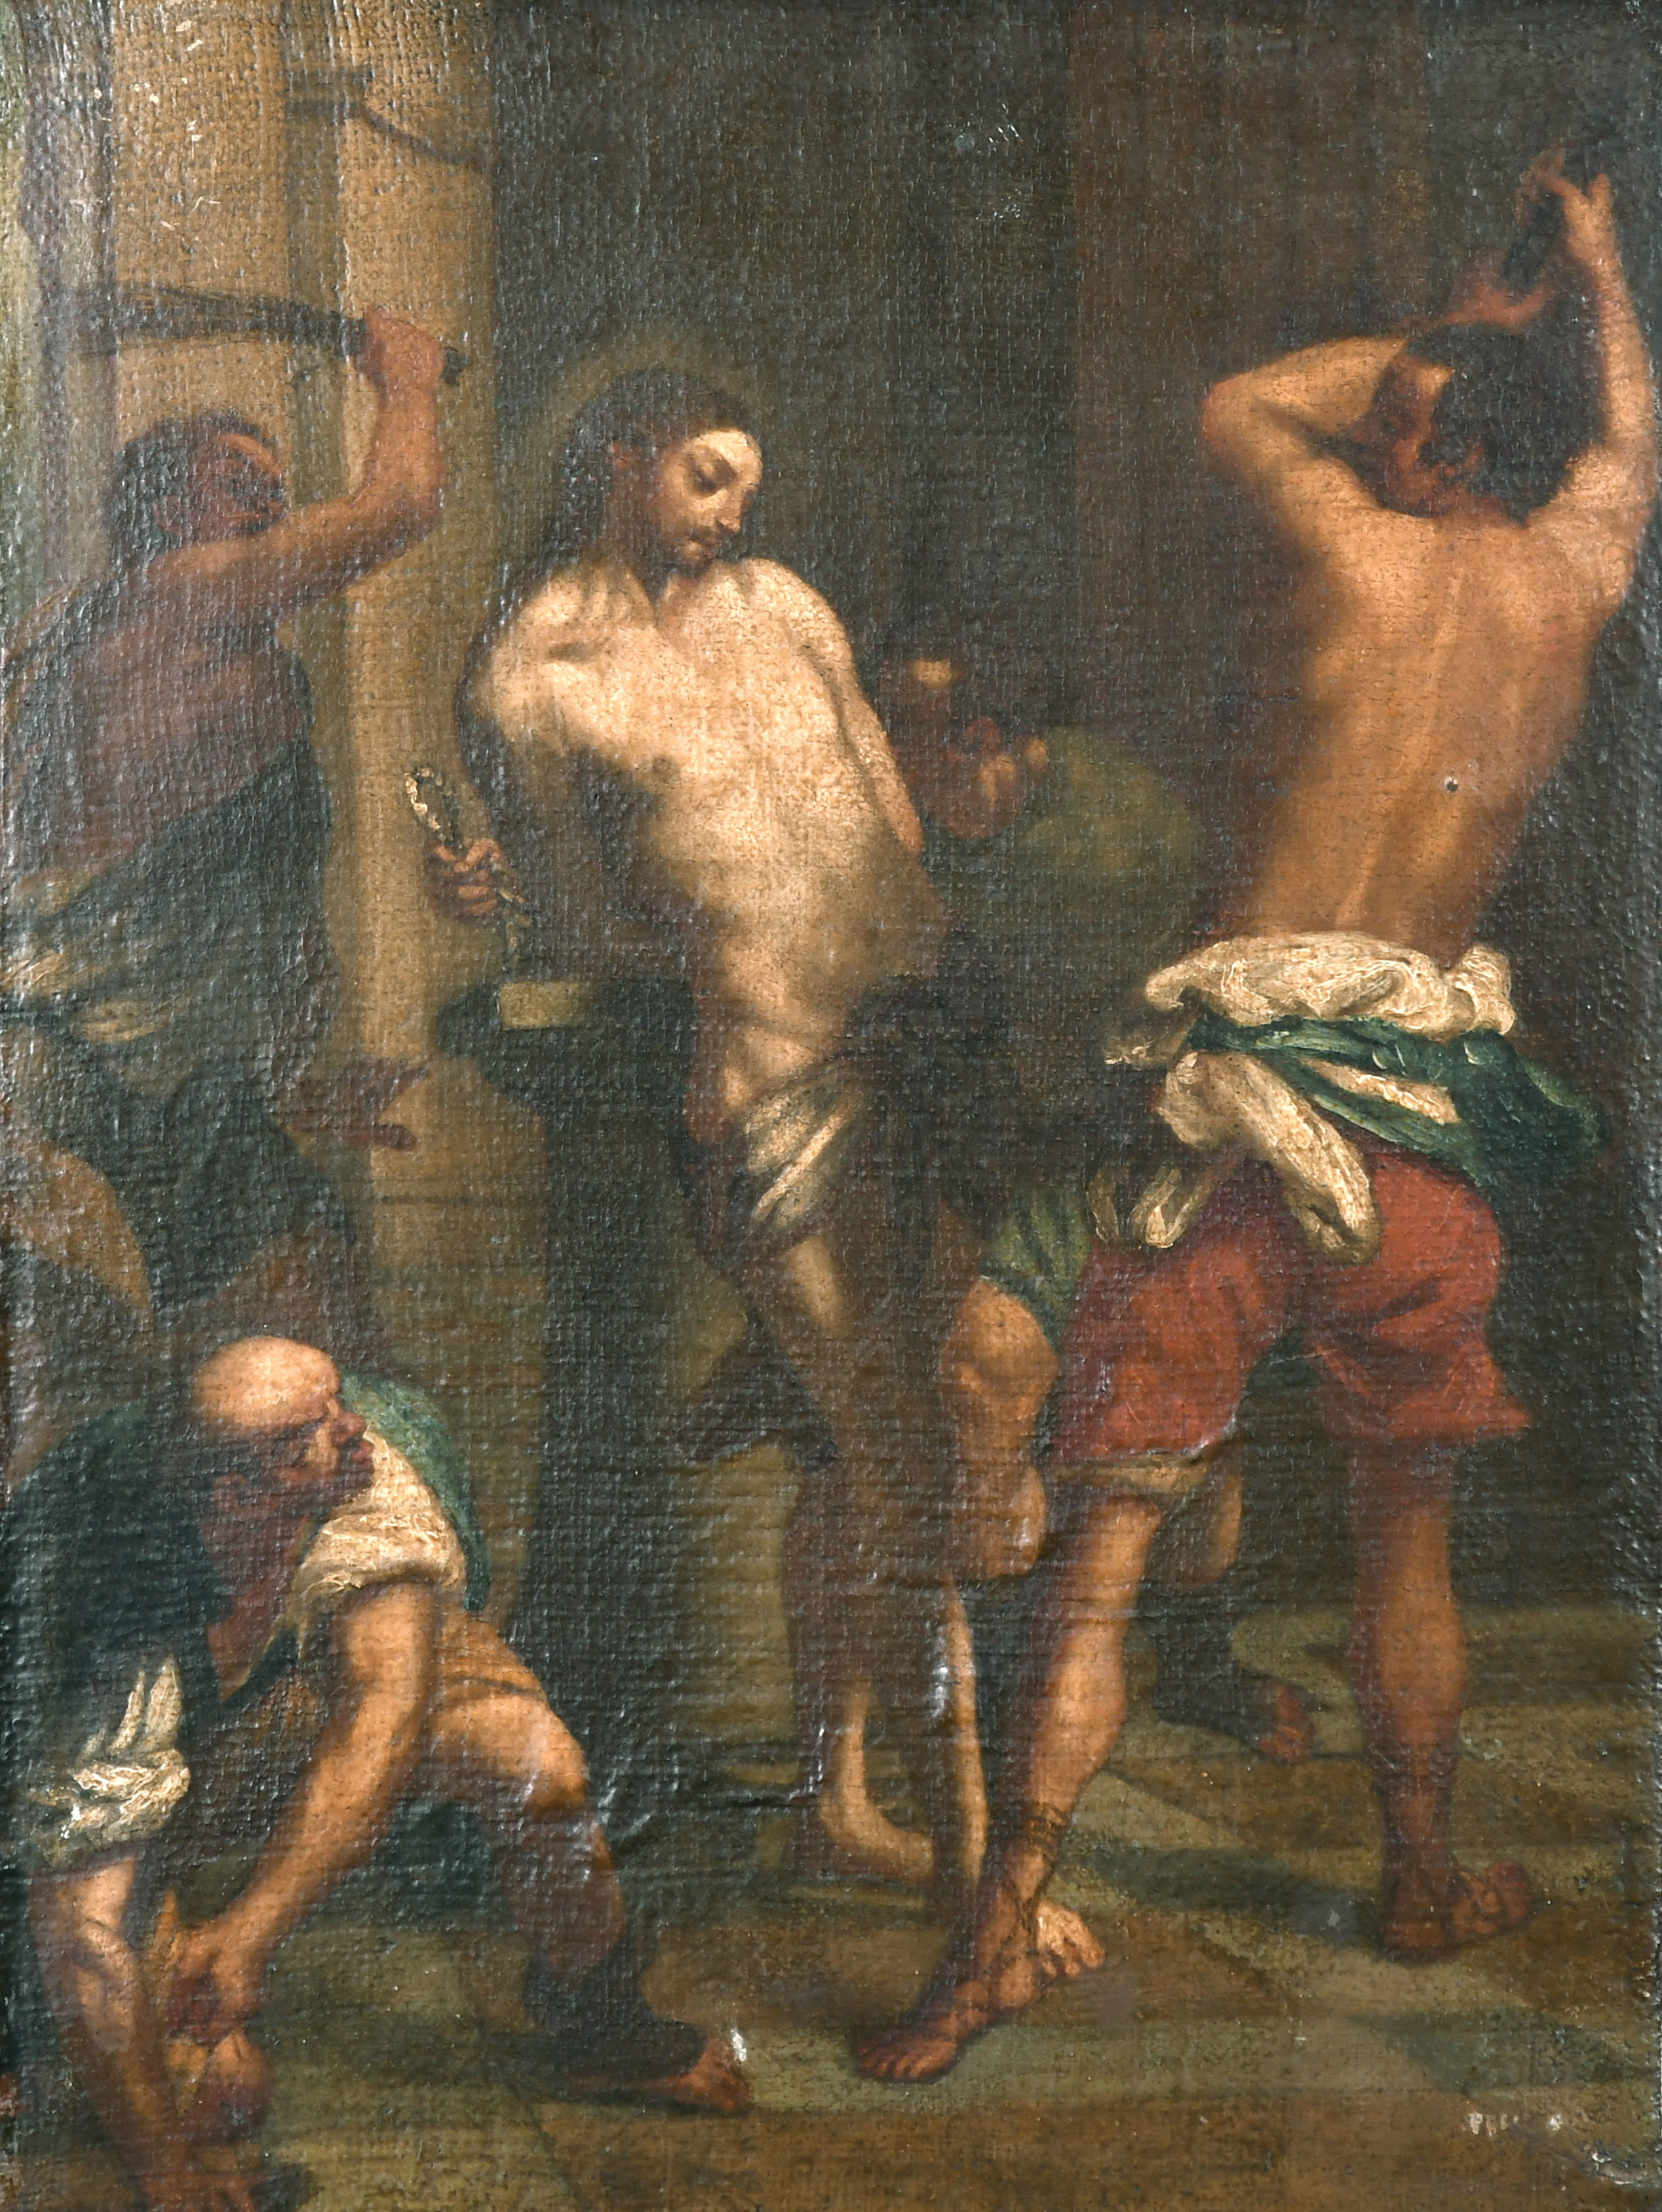 17th Century Italian School. 'The Flagellation of Christ', Oil on Canvas, Unframed, 16.25" x 12" (